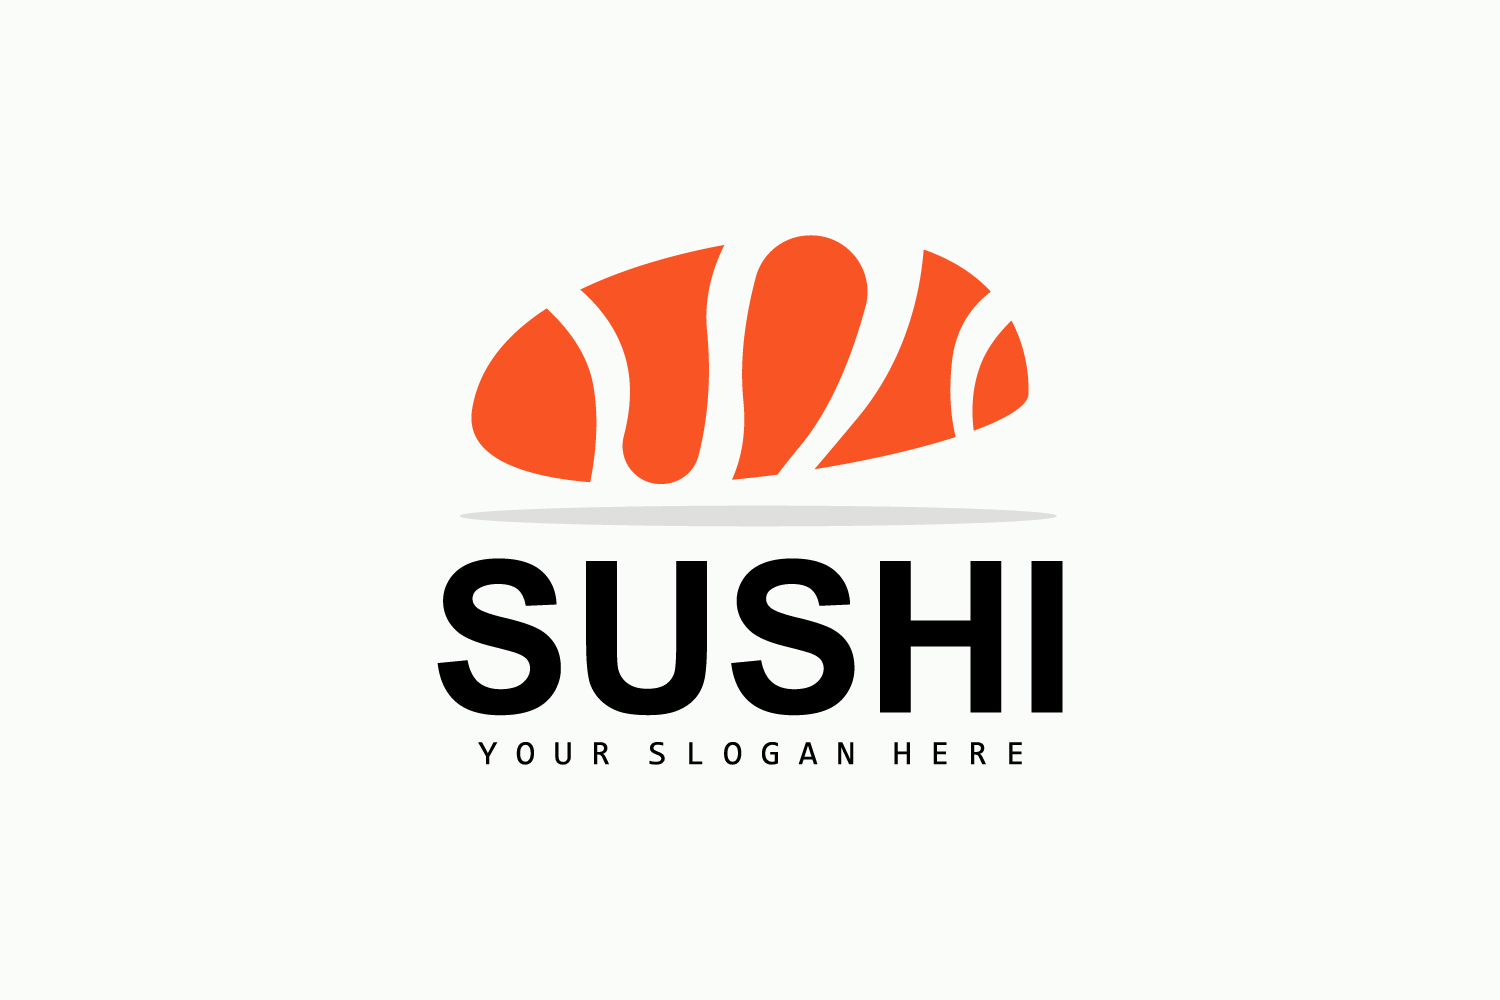 Sushi logo simple design sushi japaneseV4